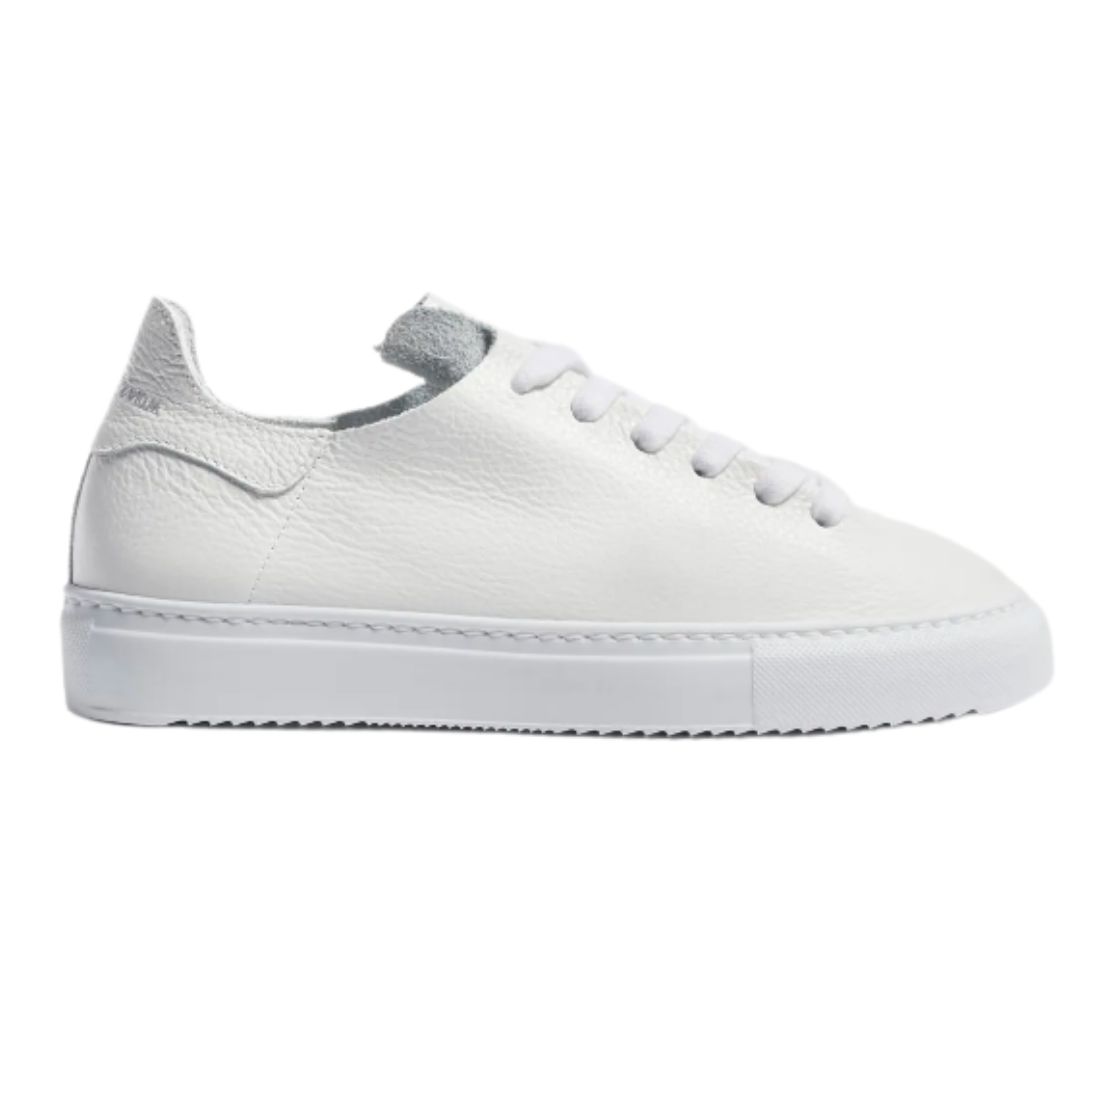 Sam Edelman Poppy Sneaker in White Leather | Cotton Island Women's ...